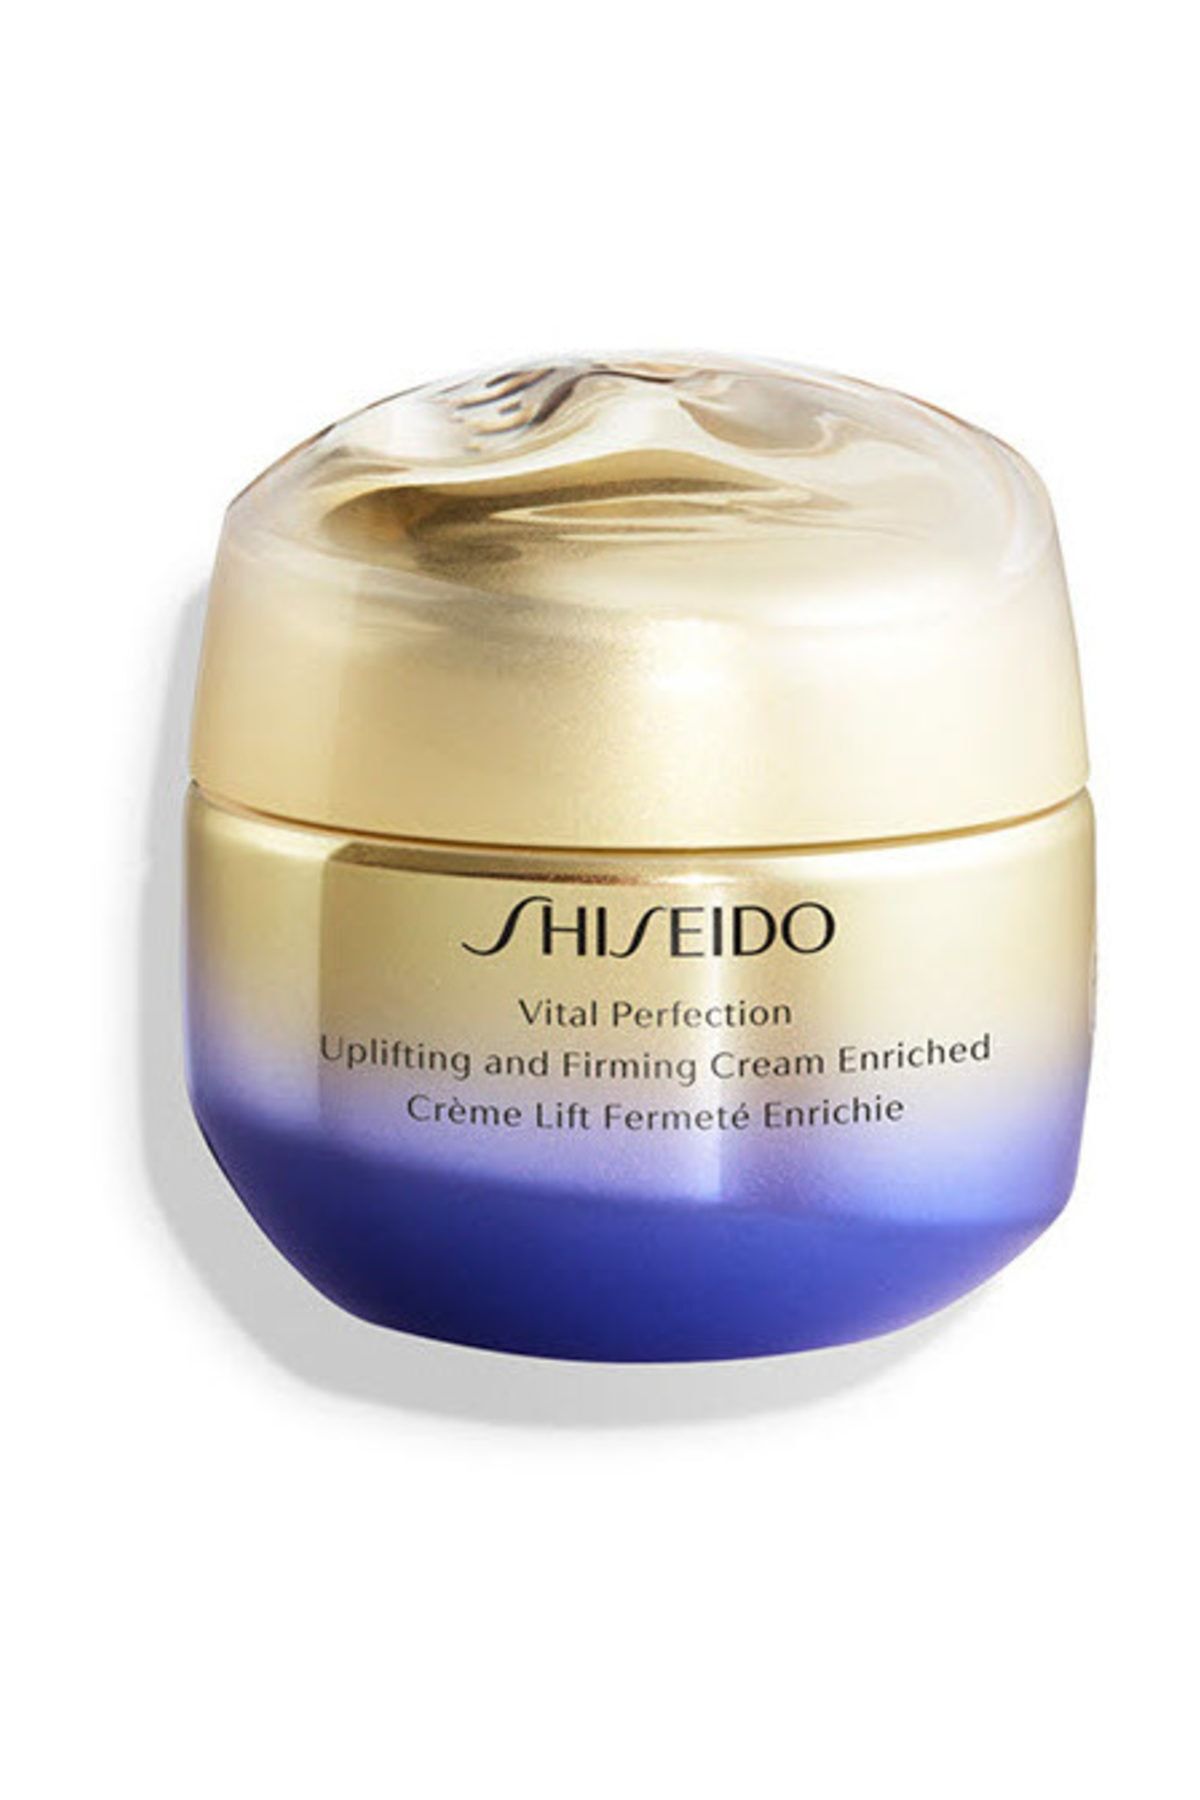 Shiseido Cildi Sıkılaştıran ve Toparlayan Krem  - VPN Uplifting And Firming Cream Enriched 50 ml 768614149408